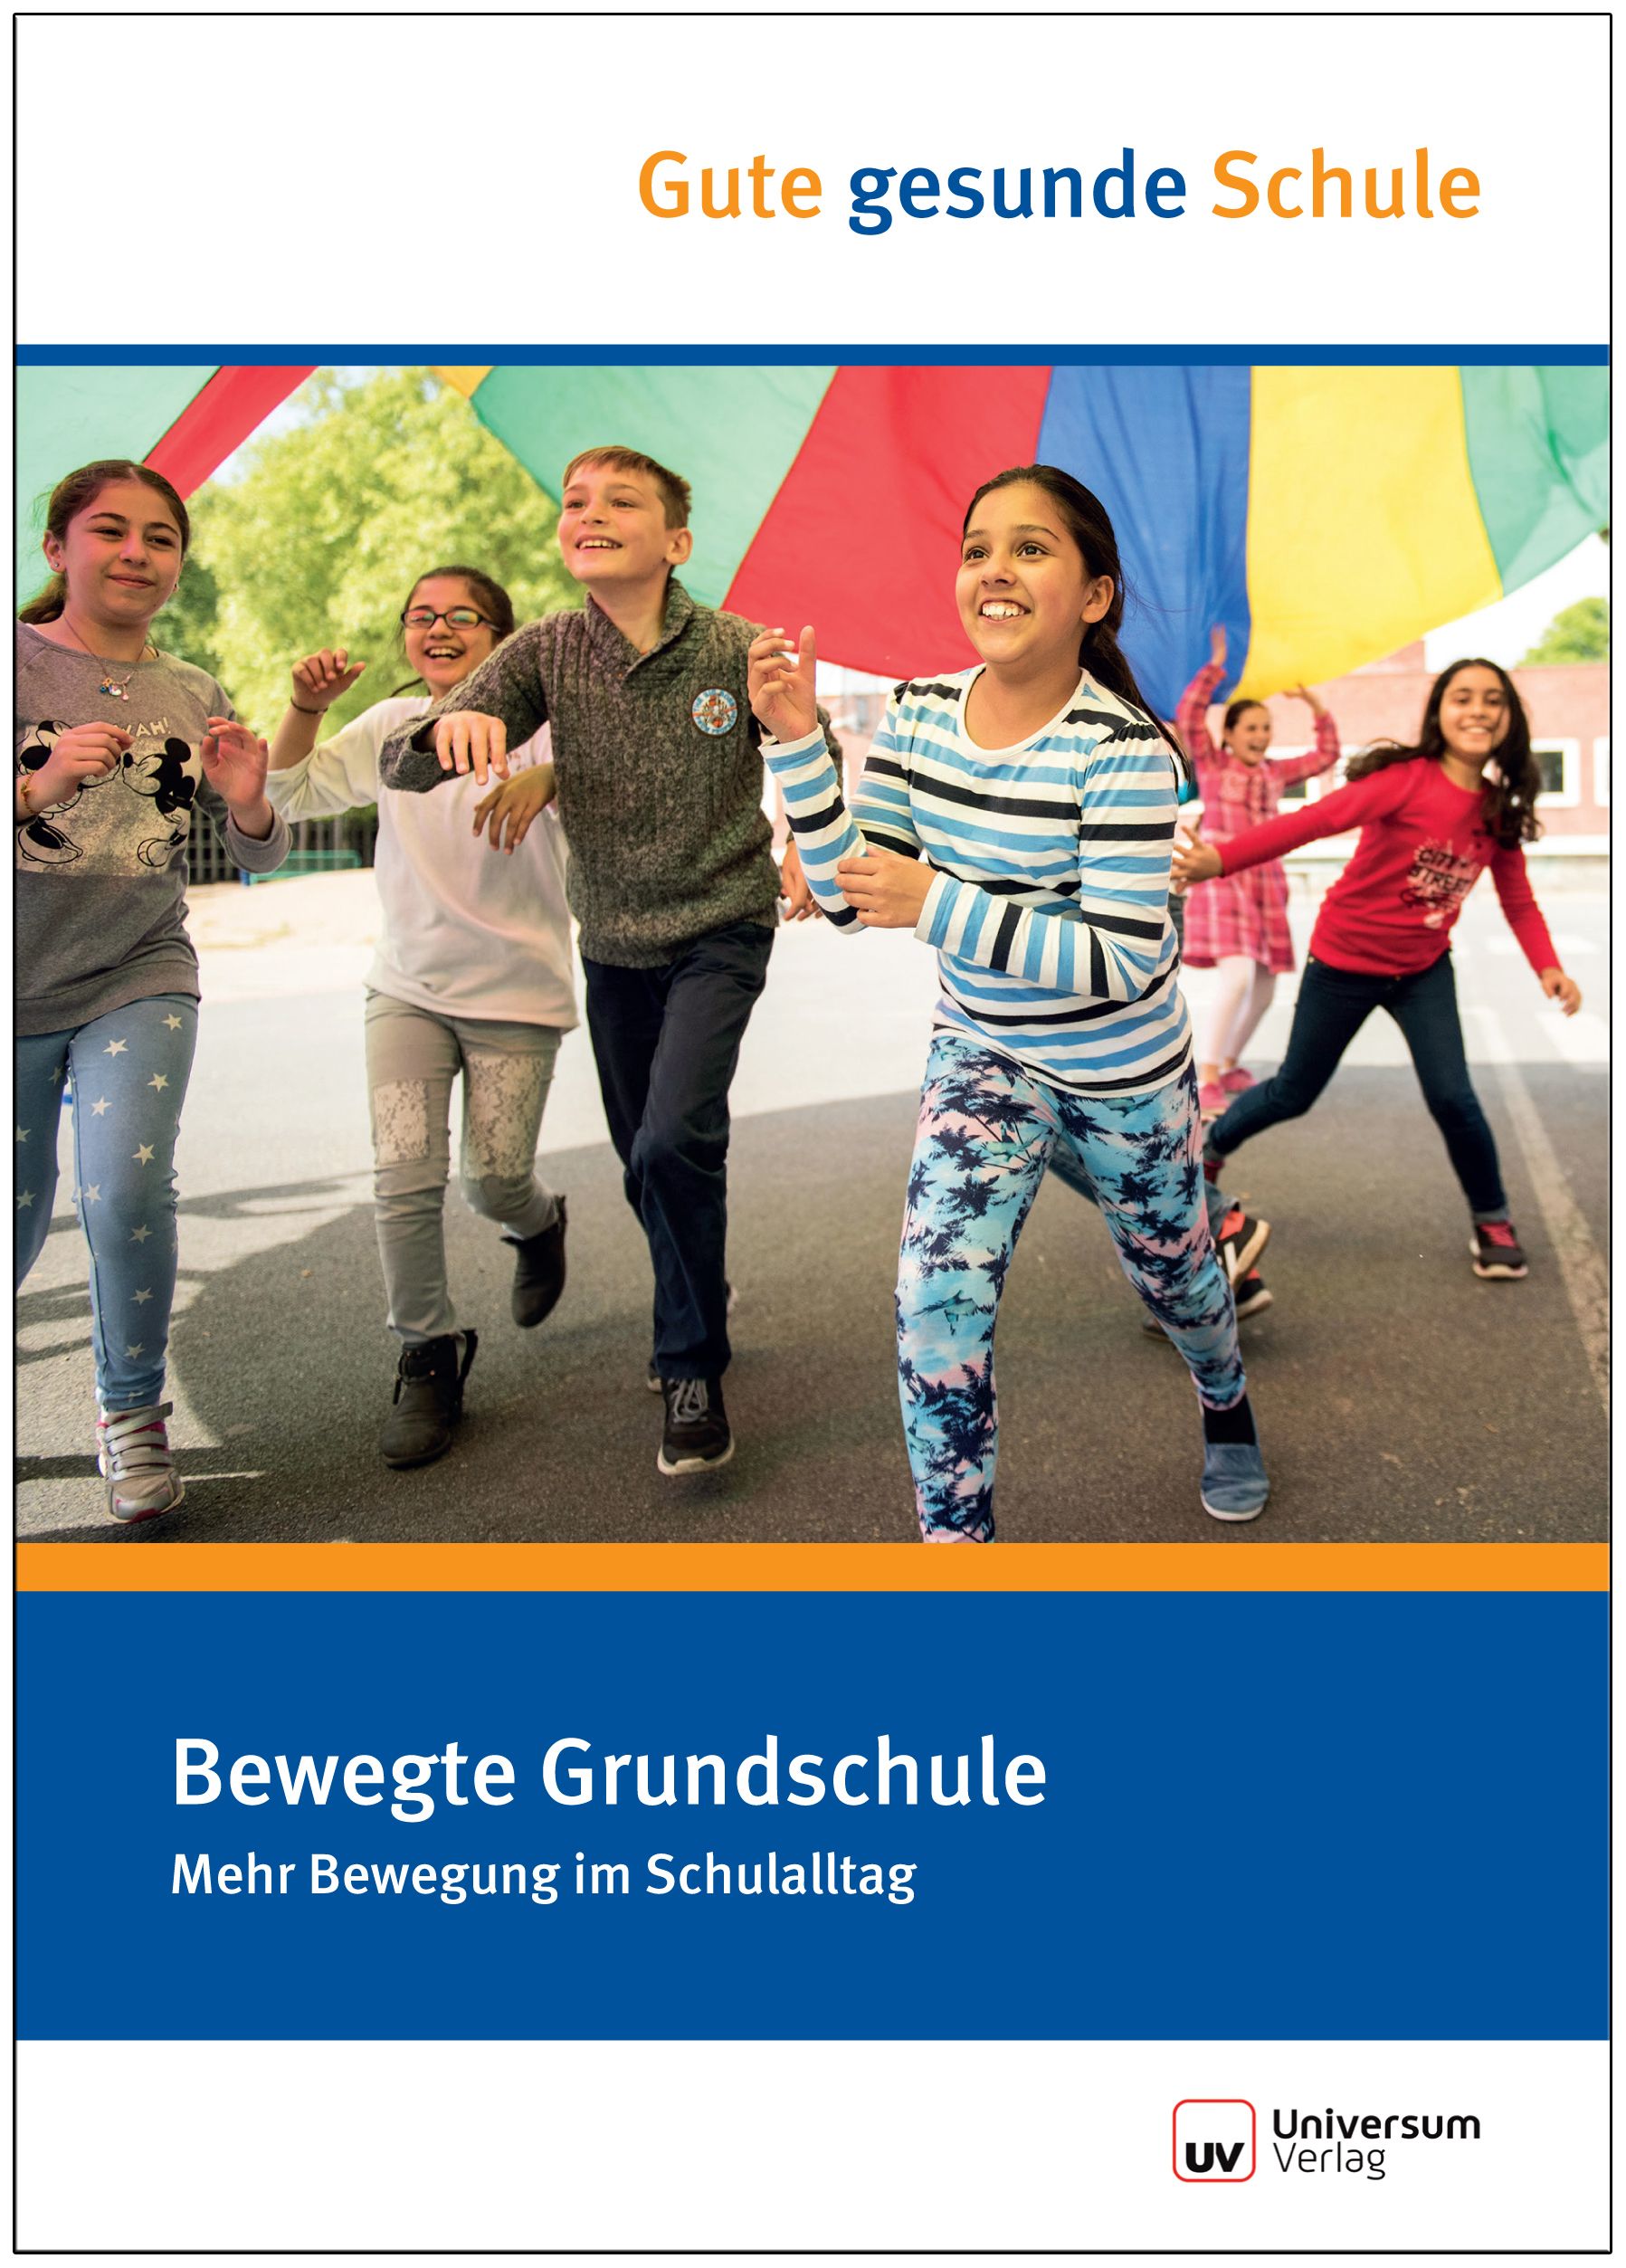 Bewegte Grundschule: gute gesunde Schule (Broschüre)